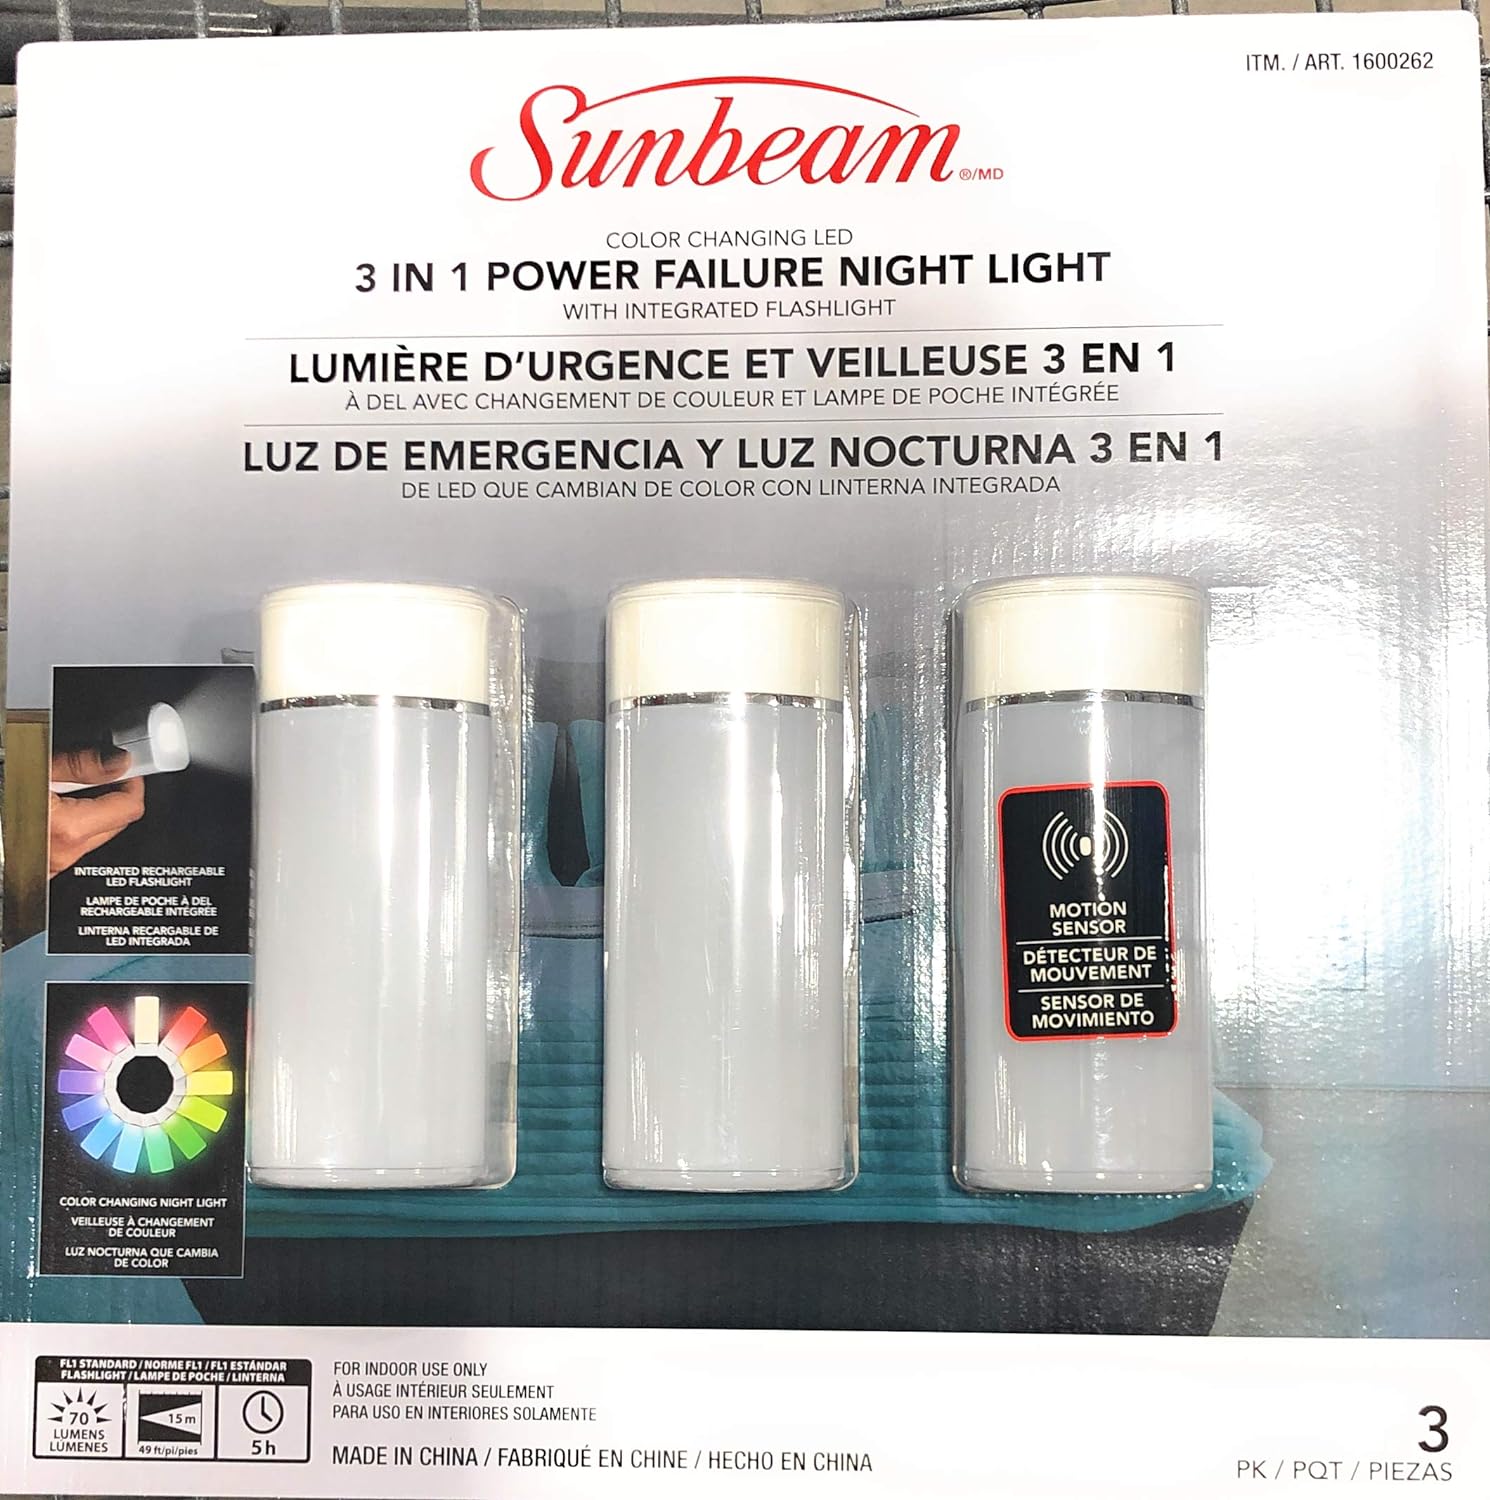 Sunbeam 3 in 1 Power Failure Night Light Review